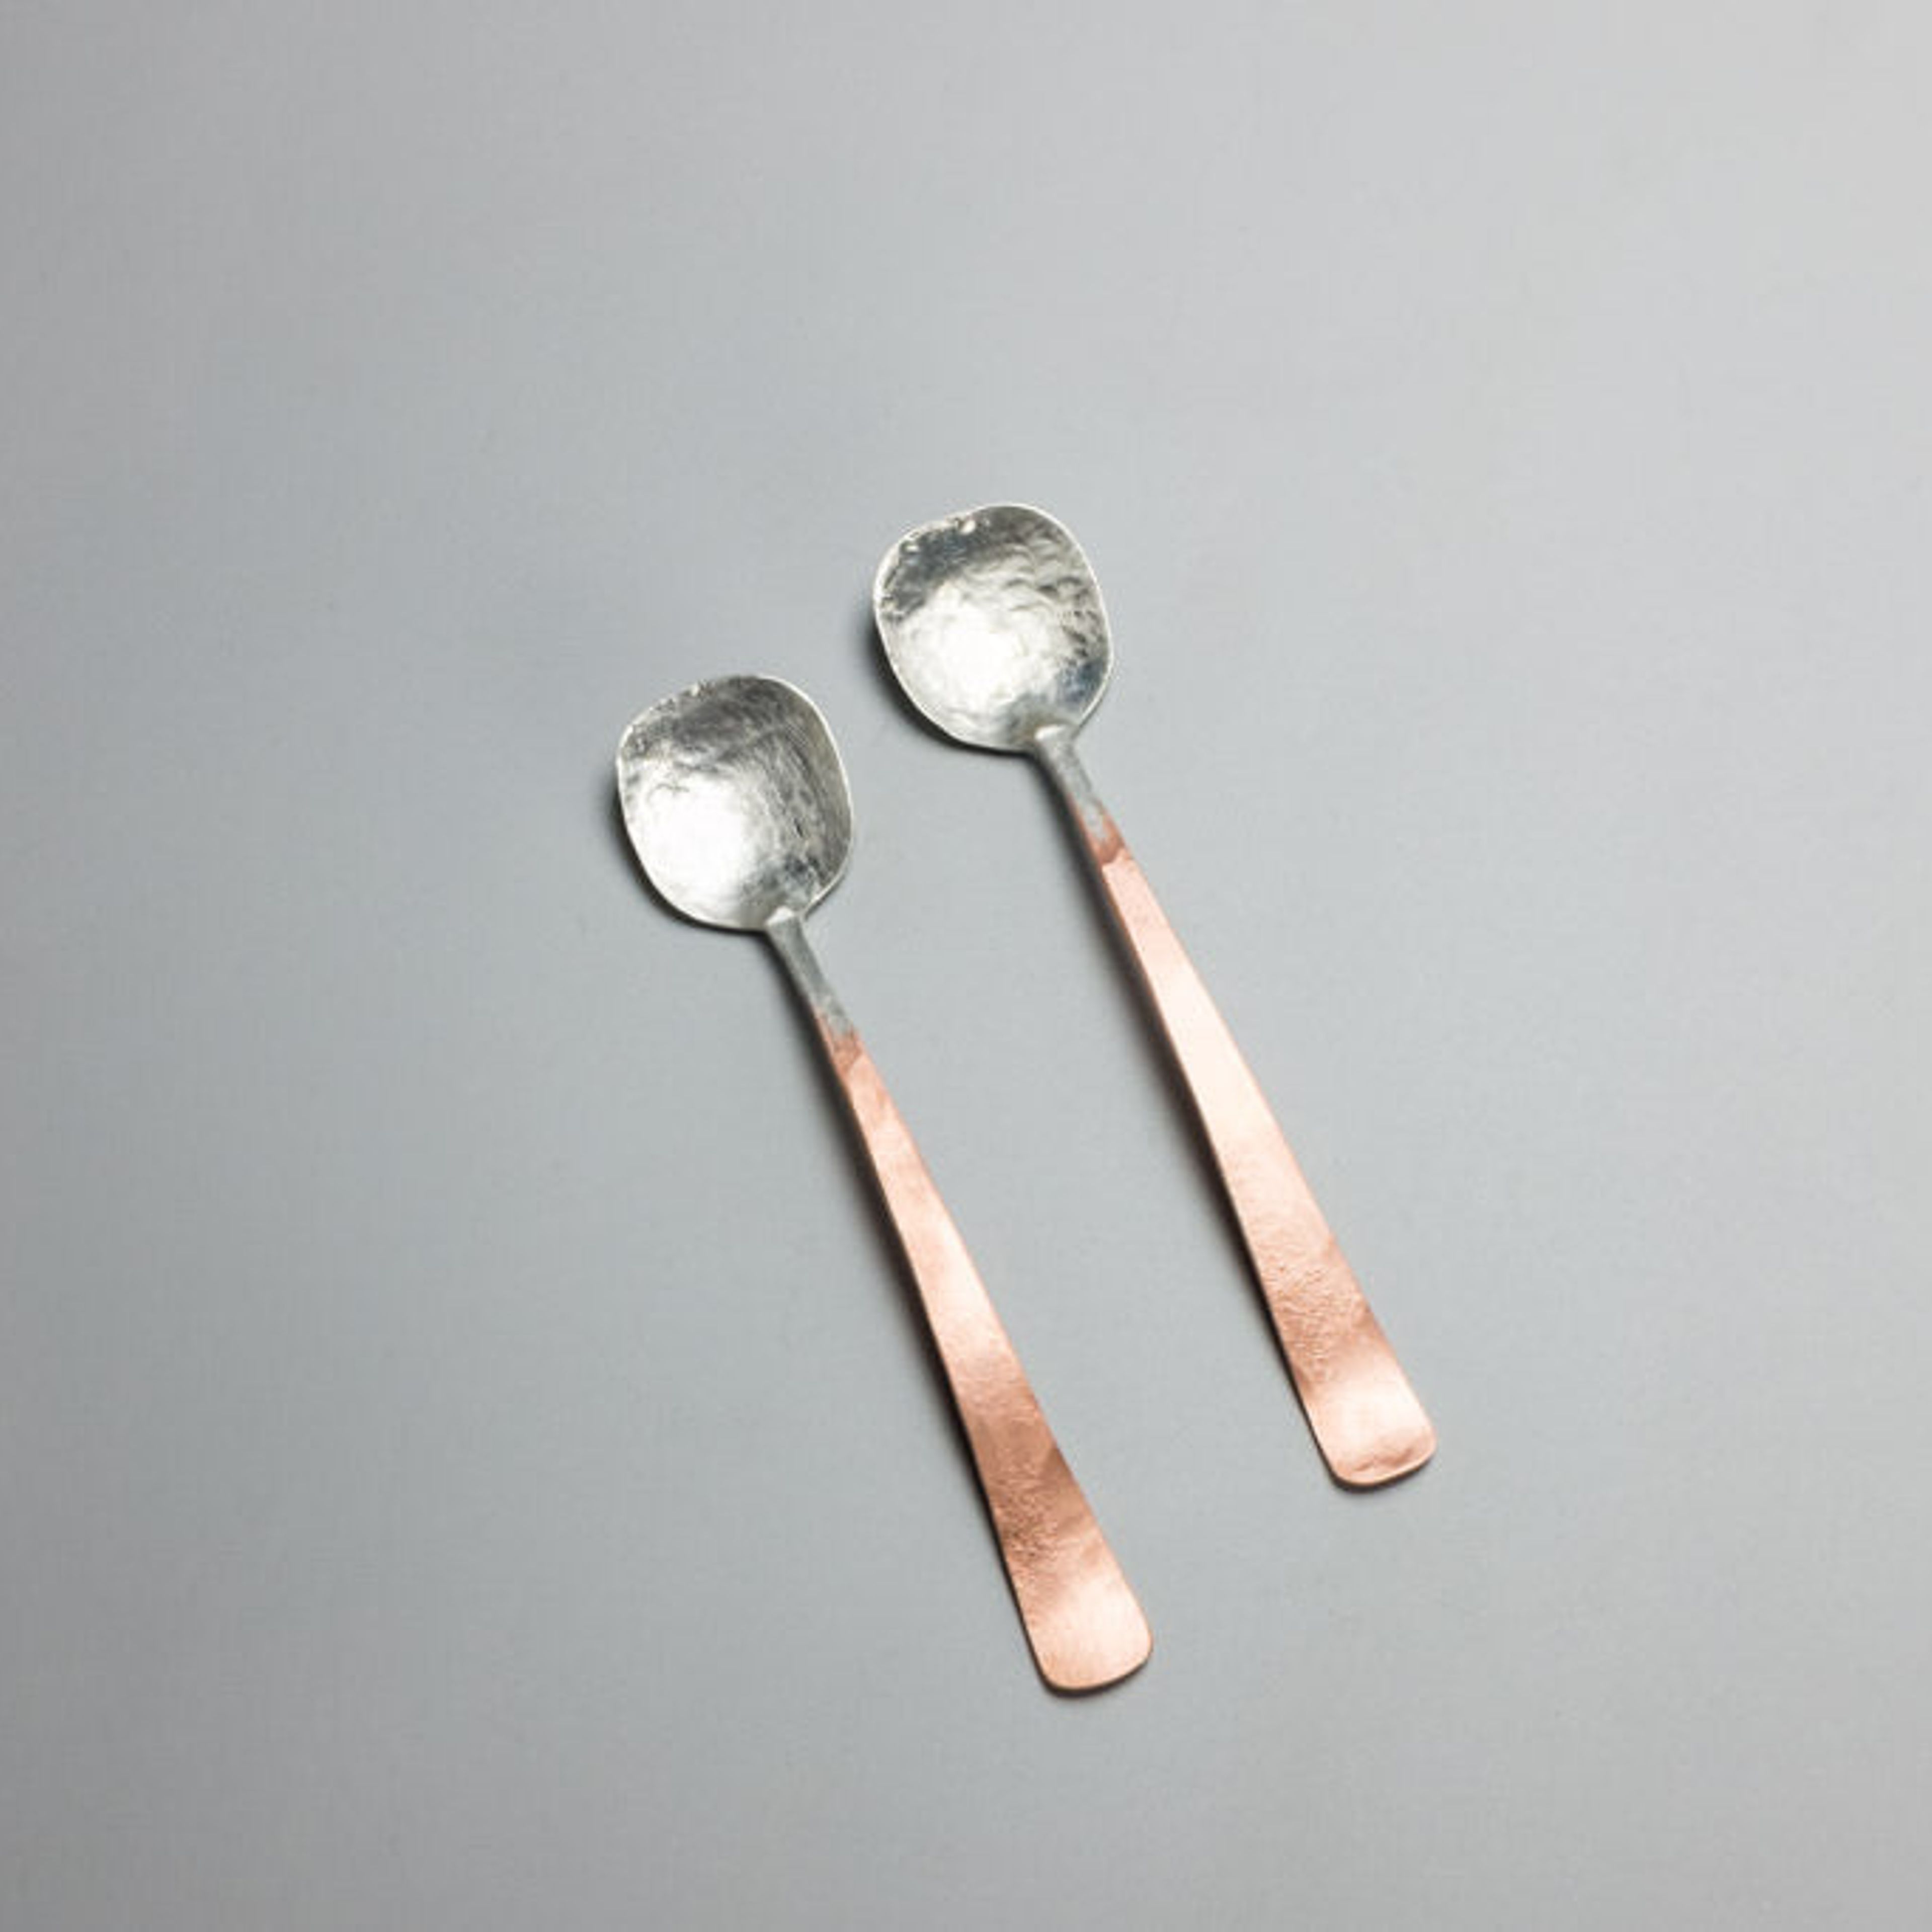 Tinned Spoon